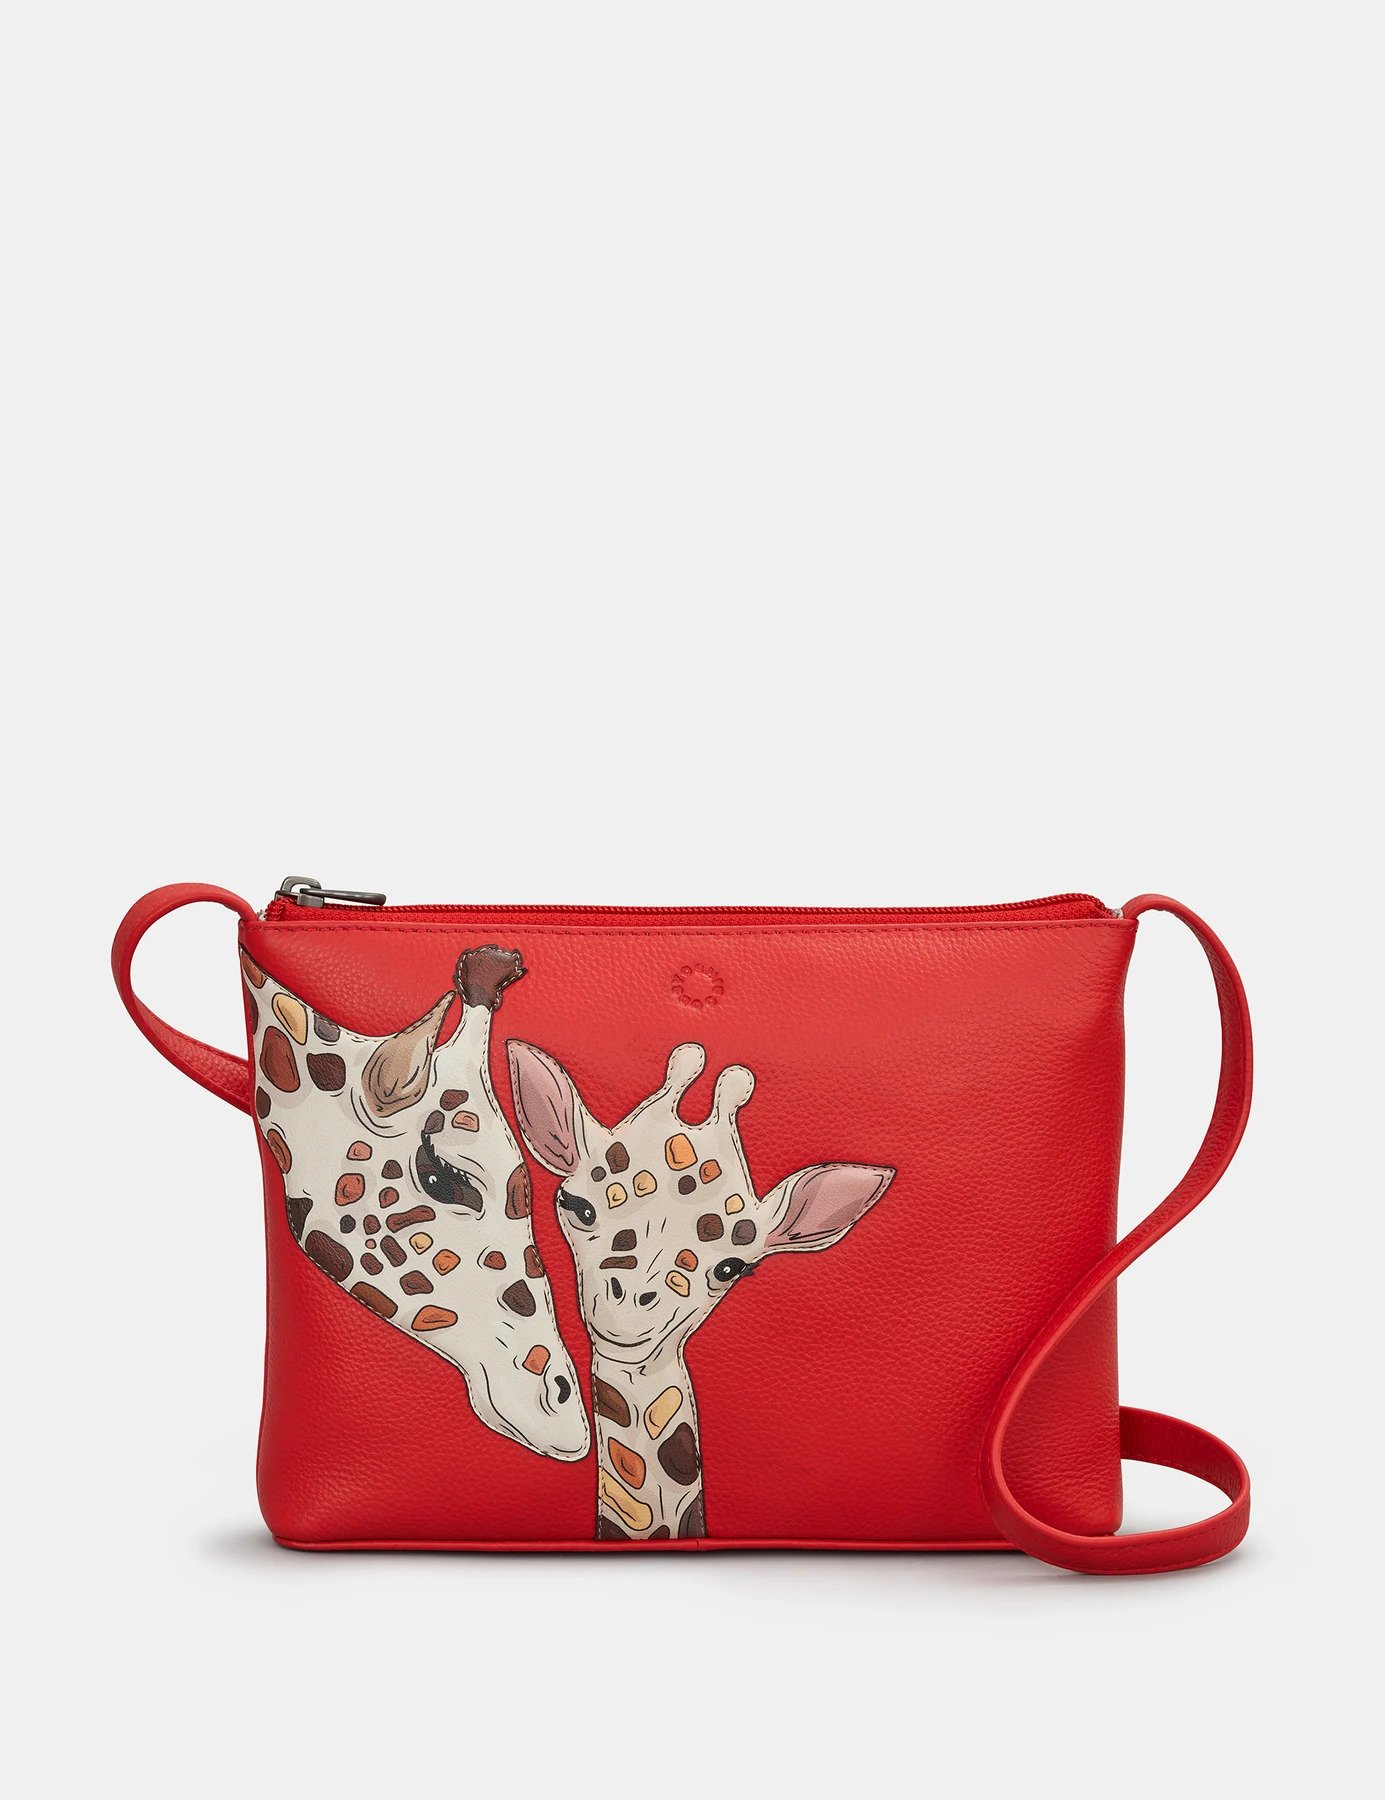 Yoshi Mother's Pride Giraffe Leather Cross Body Bag Red